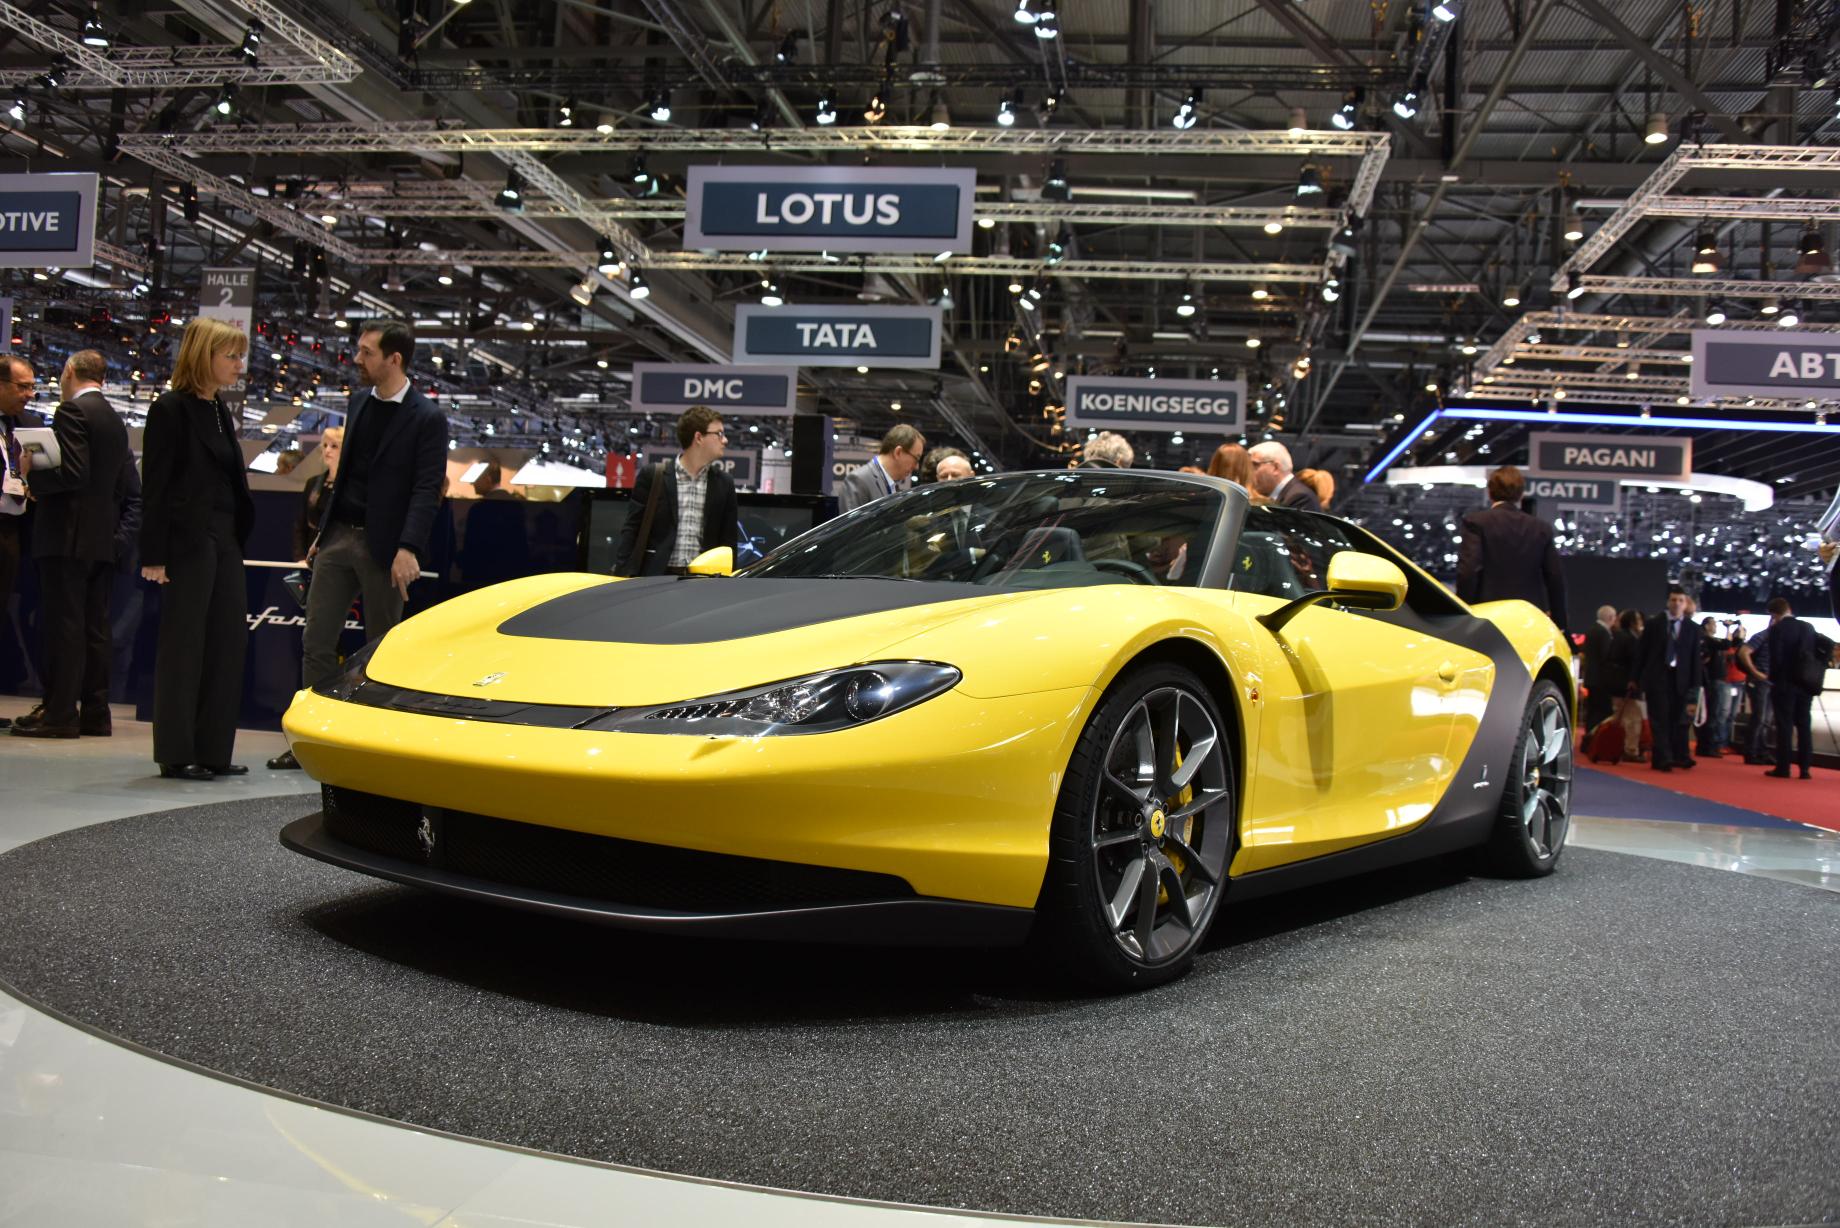 A yellow/black Ferrari Pininfarina Sergio, facing left, displayed at a motor show.